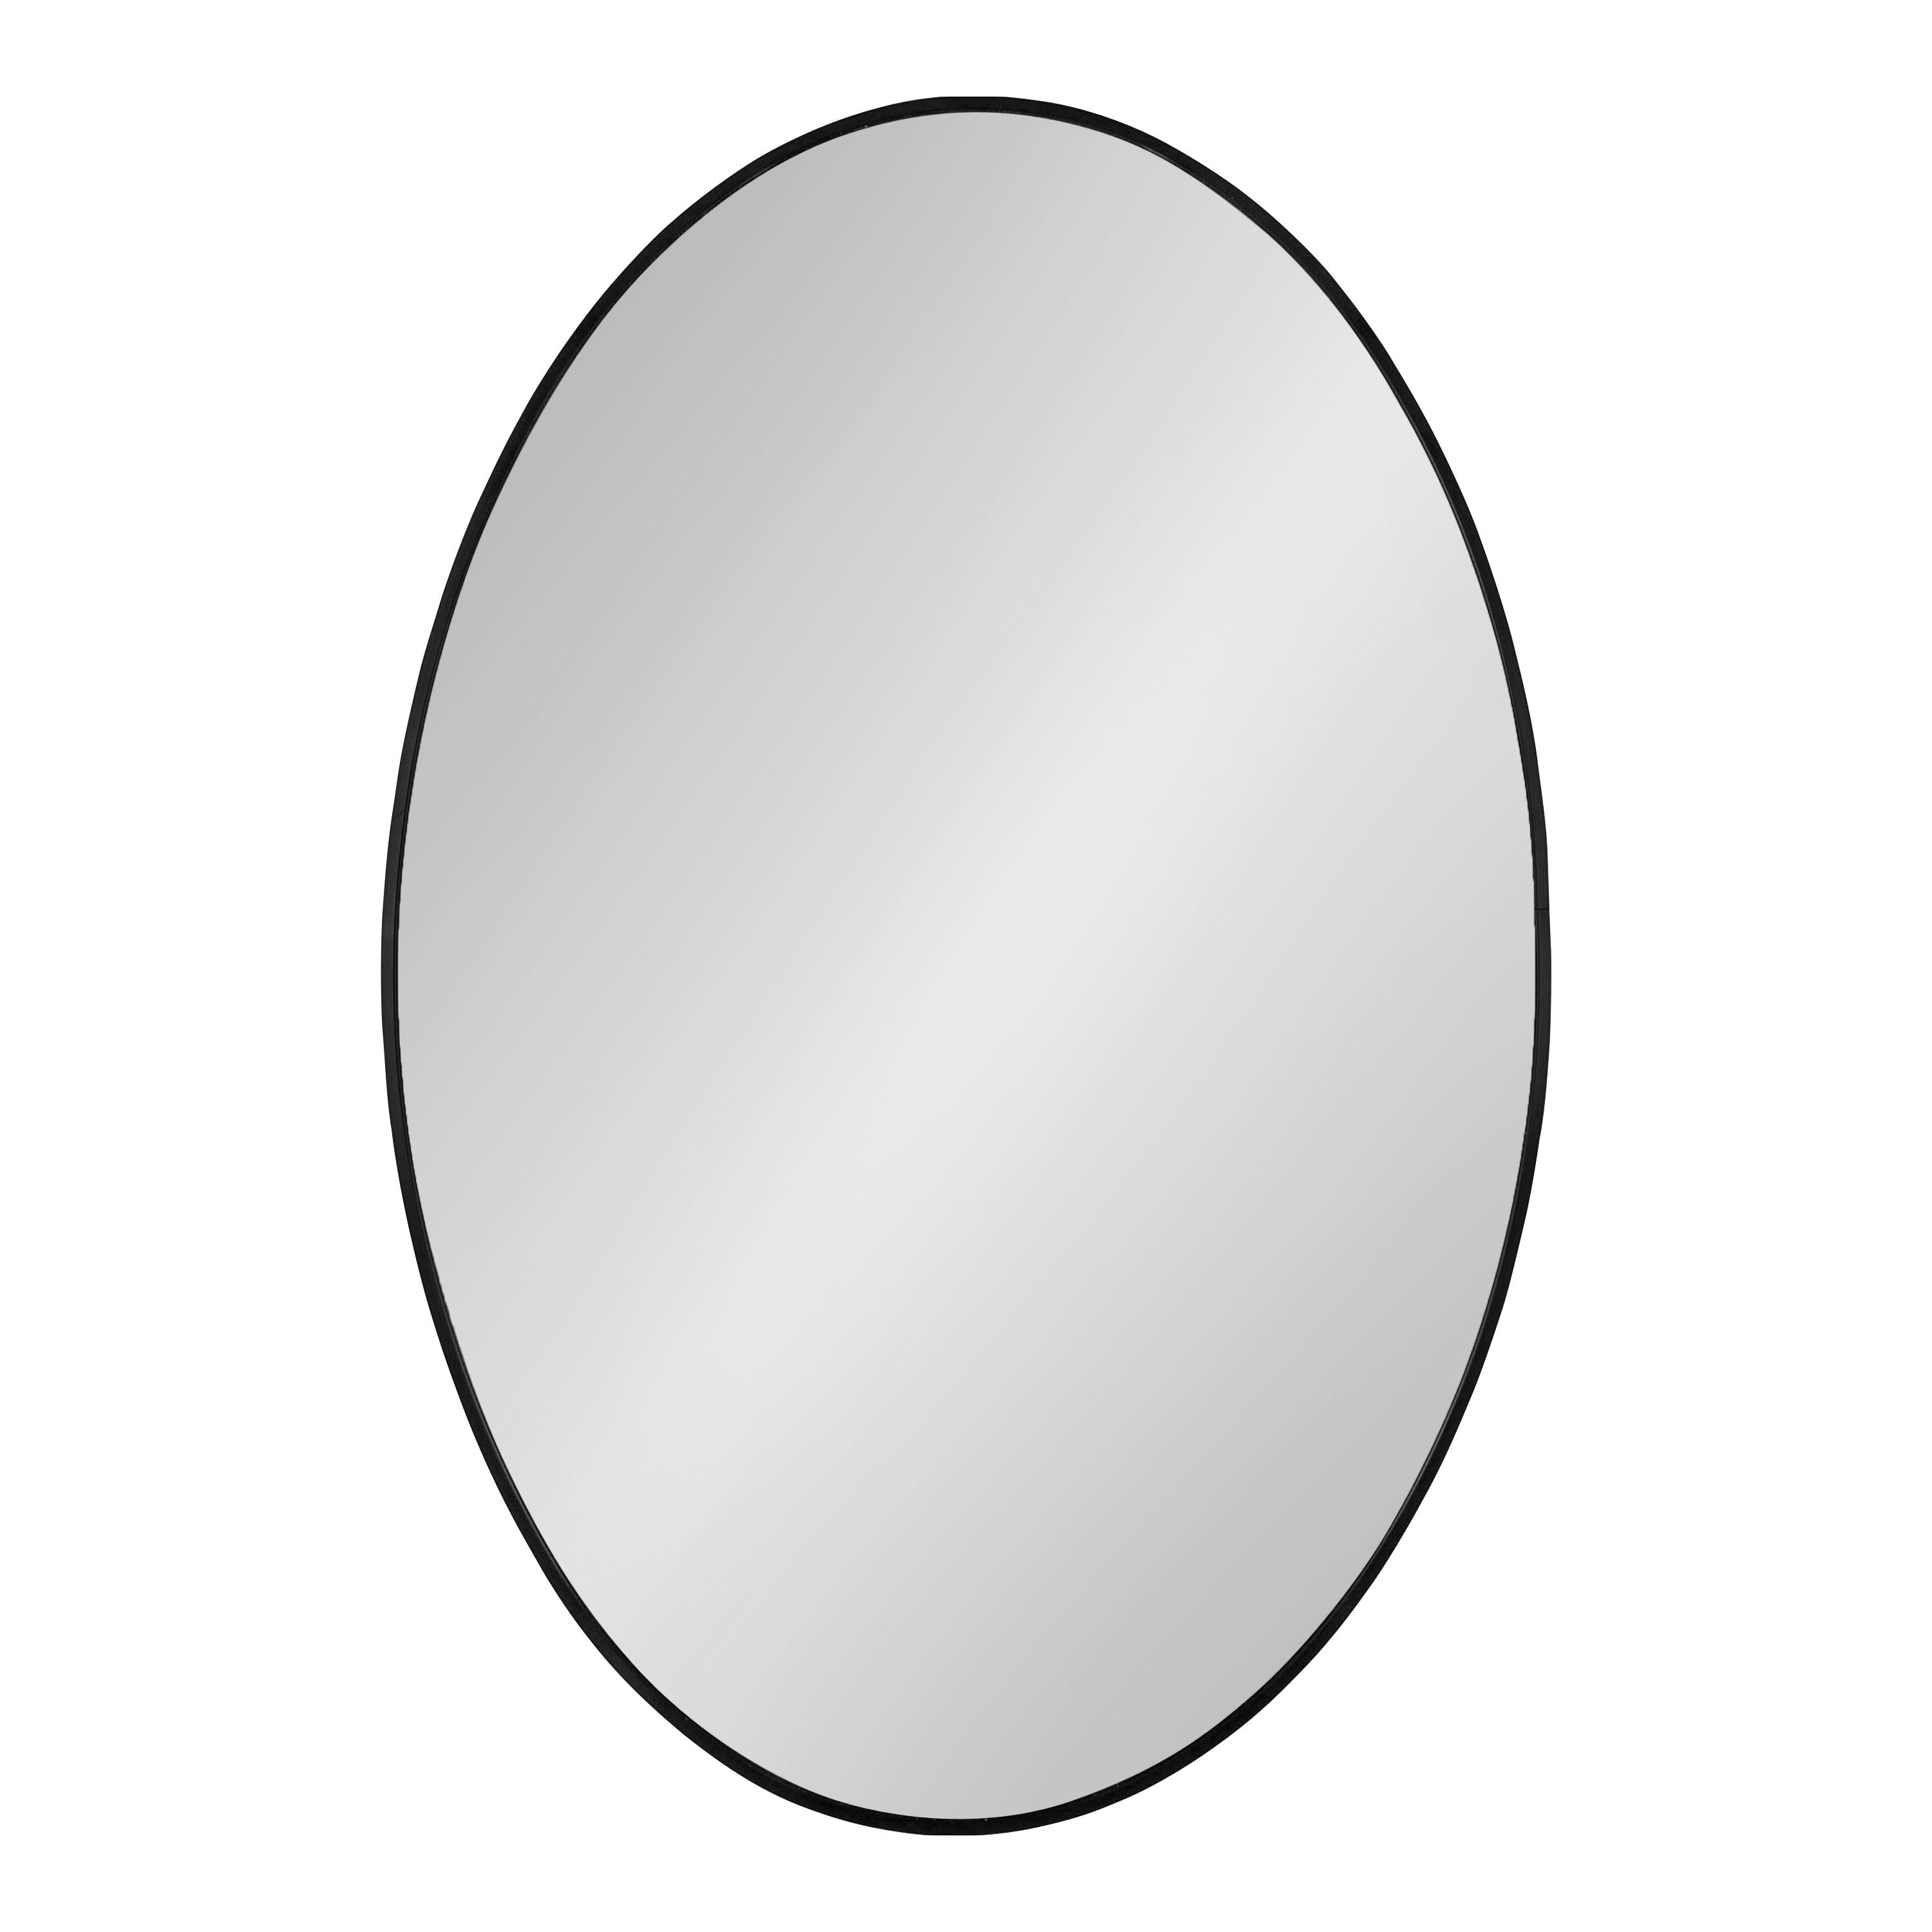 Zayda Metal Oval Mirror